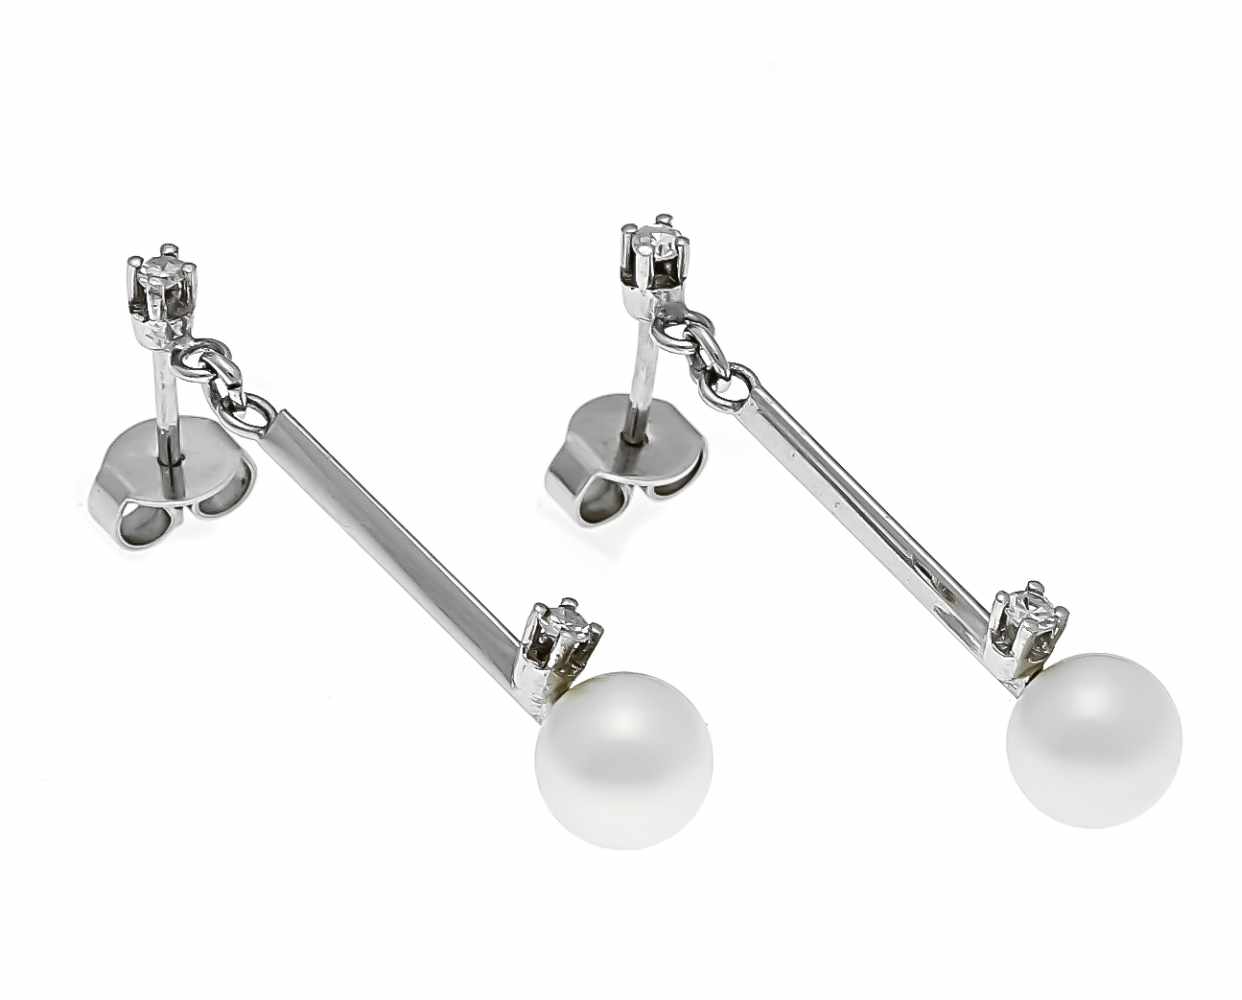 Akoya diamond stud earrings WG 585/000 with 2 Akoya pearls 6.5 mm and 4 diamonds, in total